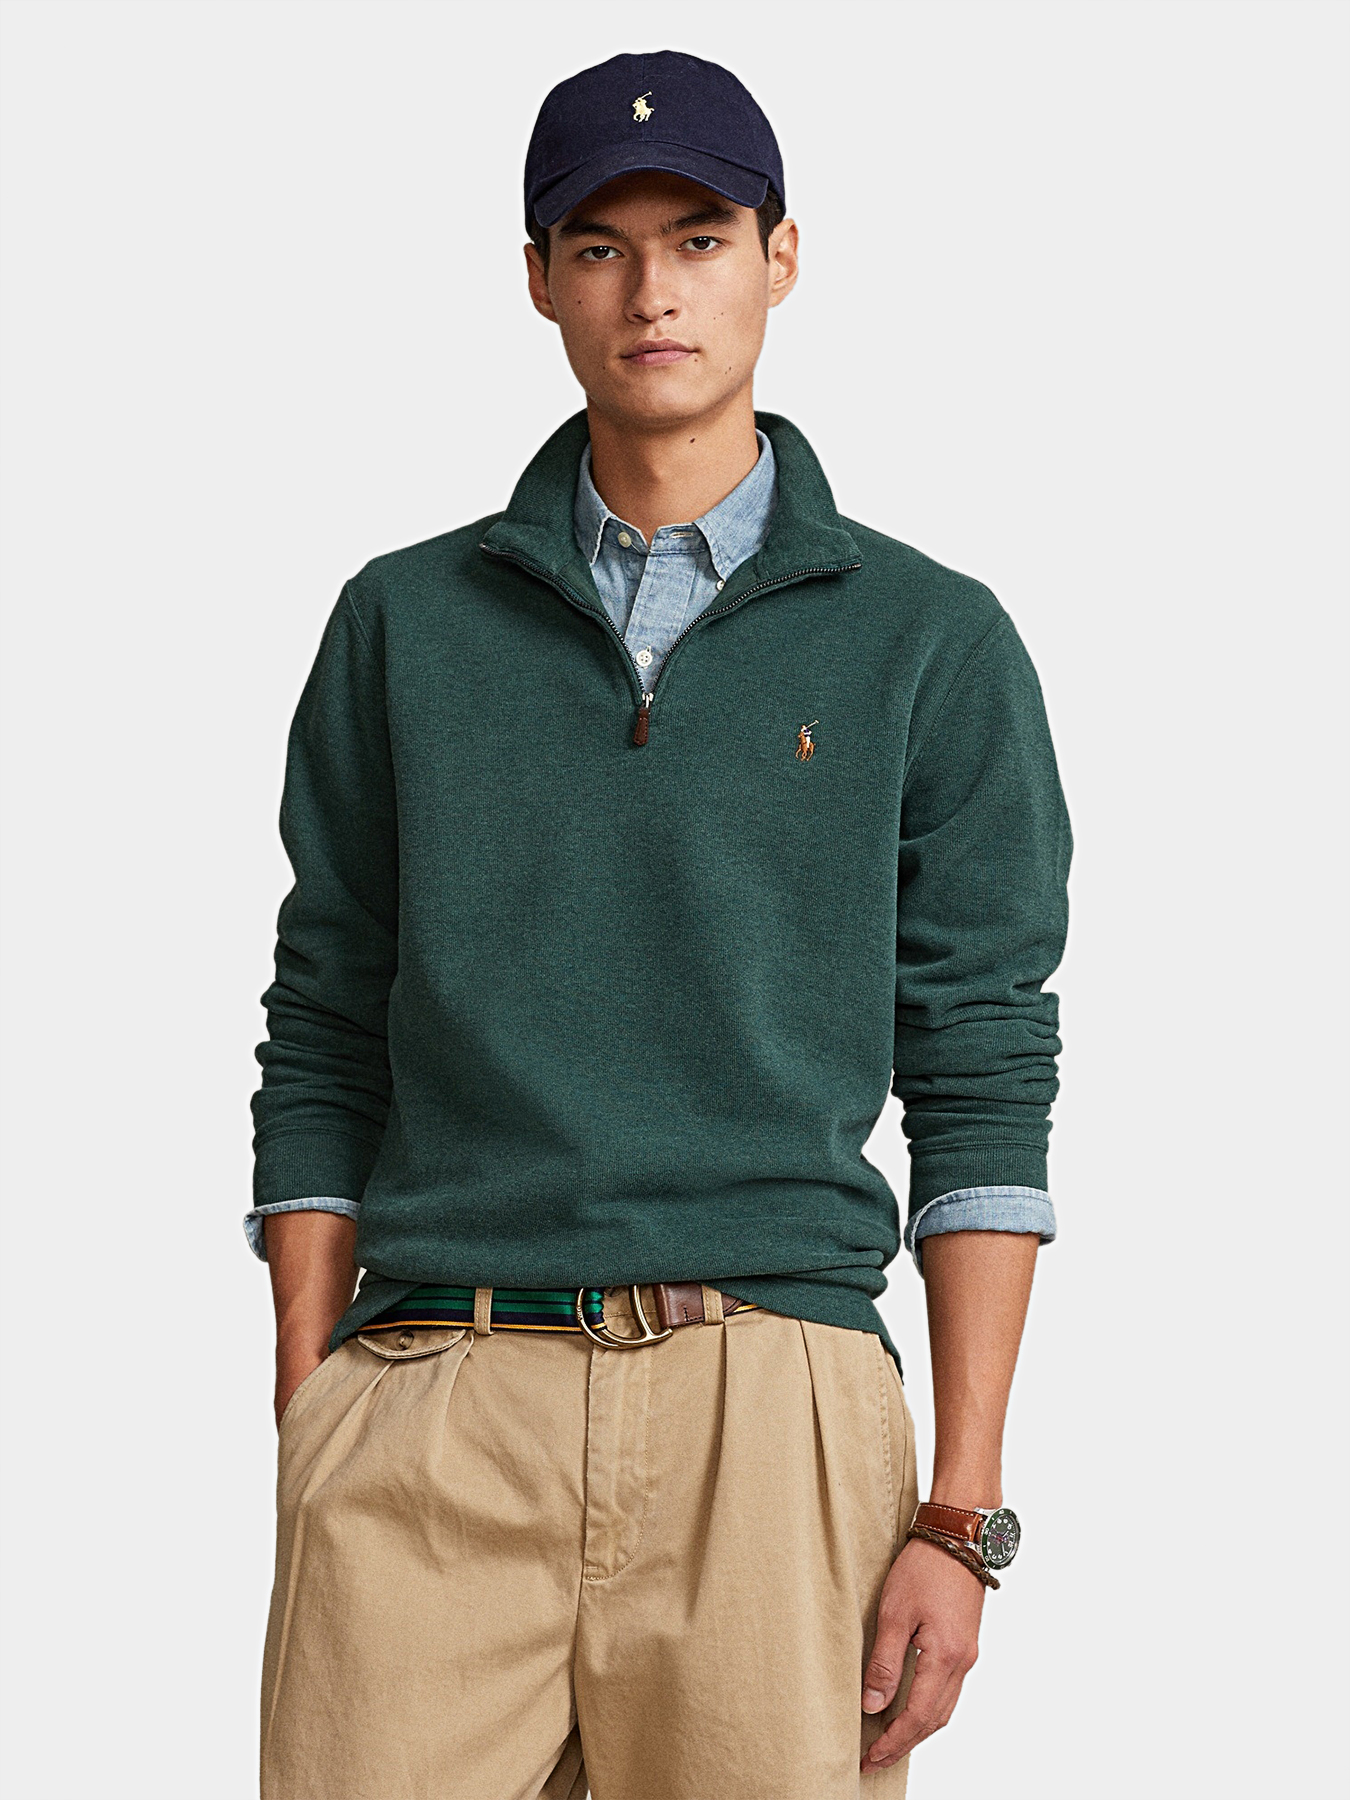 Green sweater brand POLO RALPH LAUREN — /en